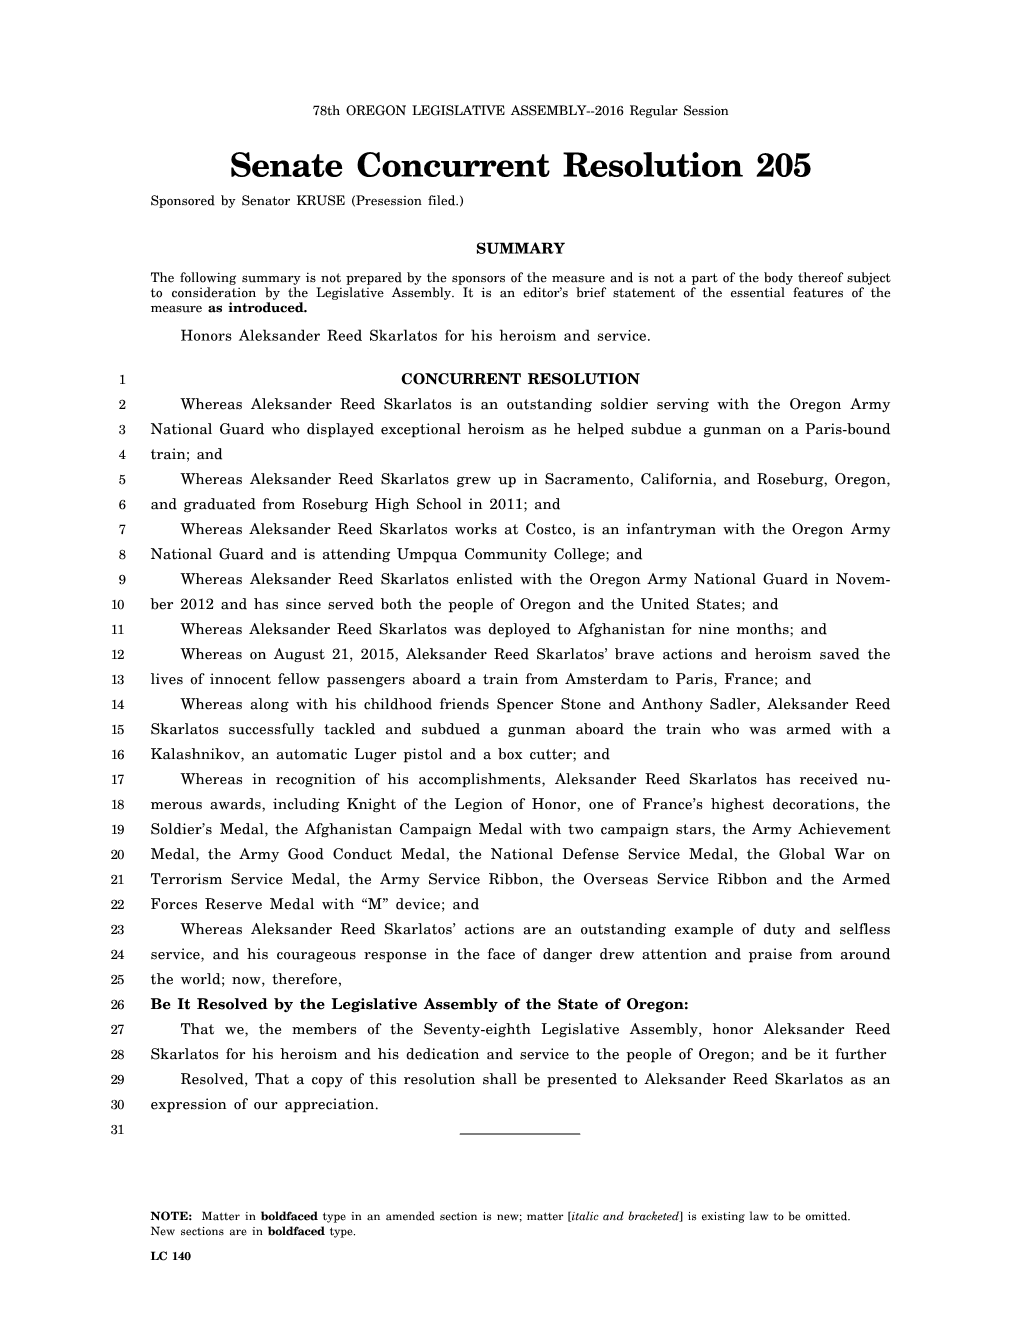 Senate Concurrent Resolution 205 Sponsored by Senator KRUSE (Presession Filed.)